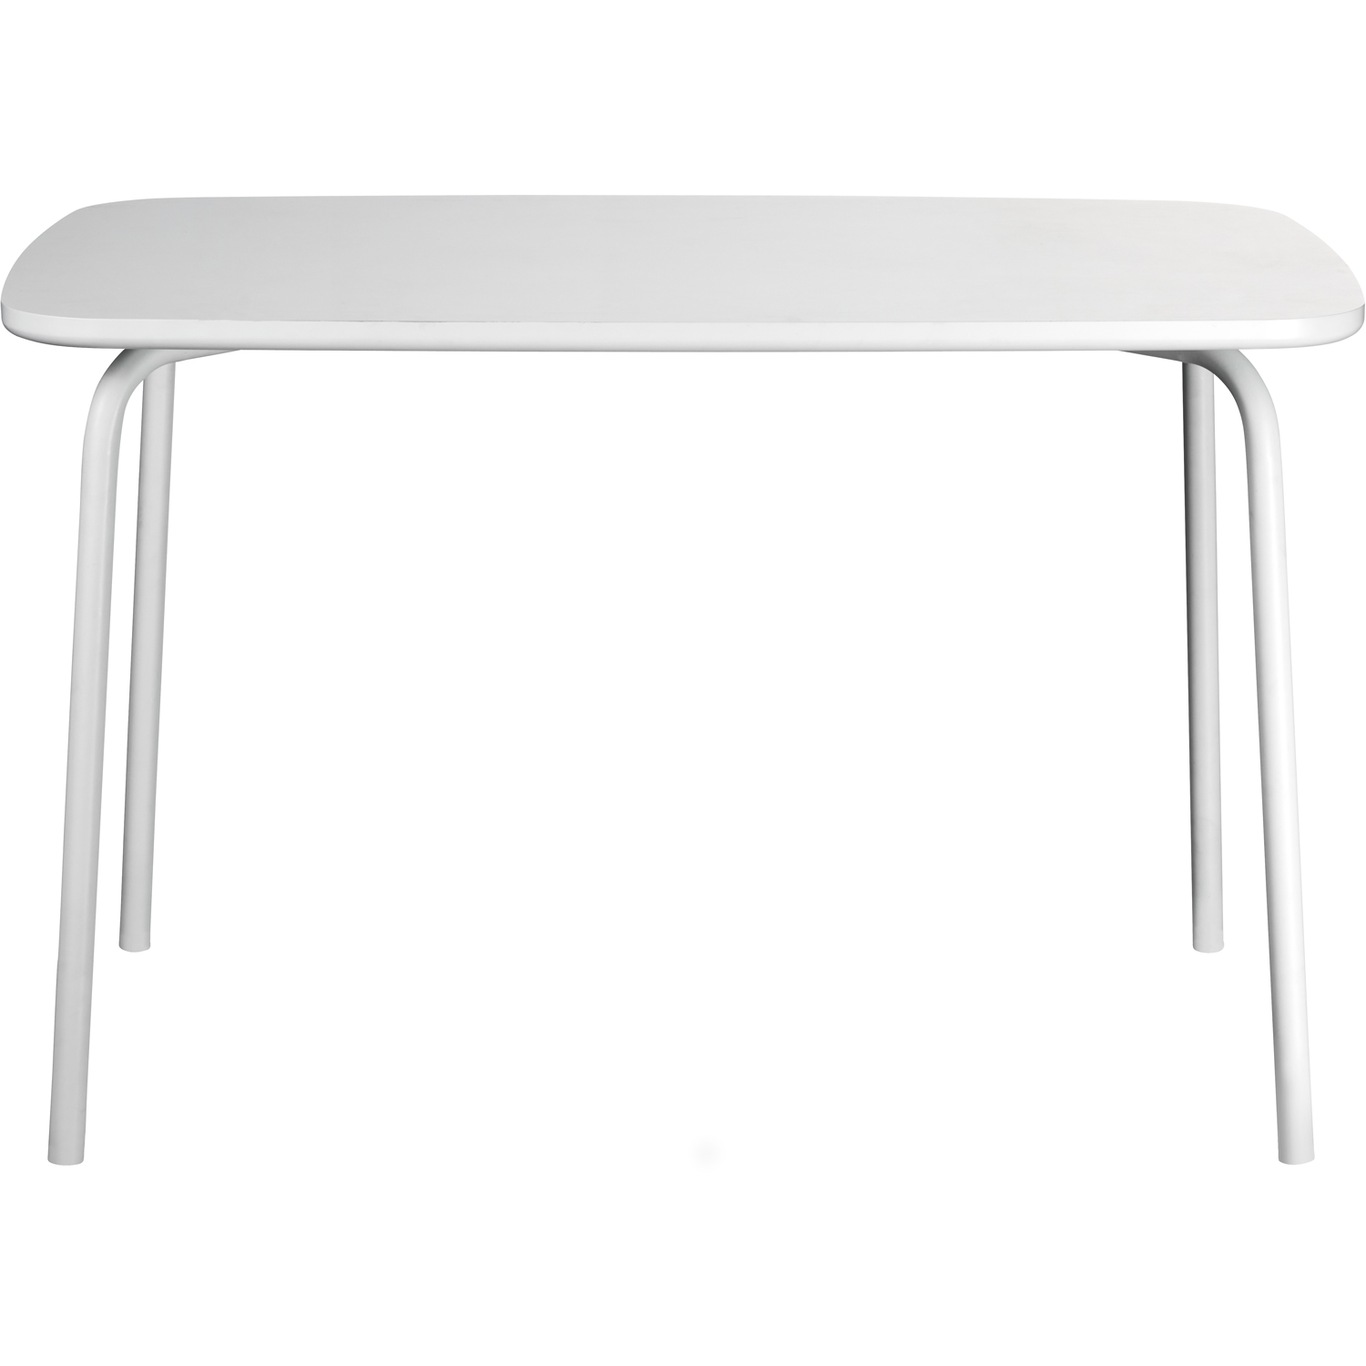 Same Dining Table 70x115 cm, White